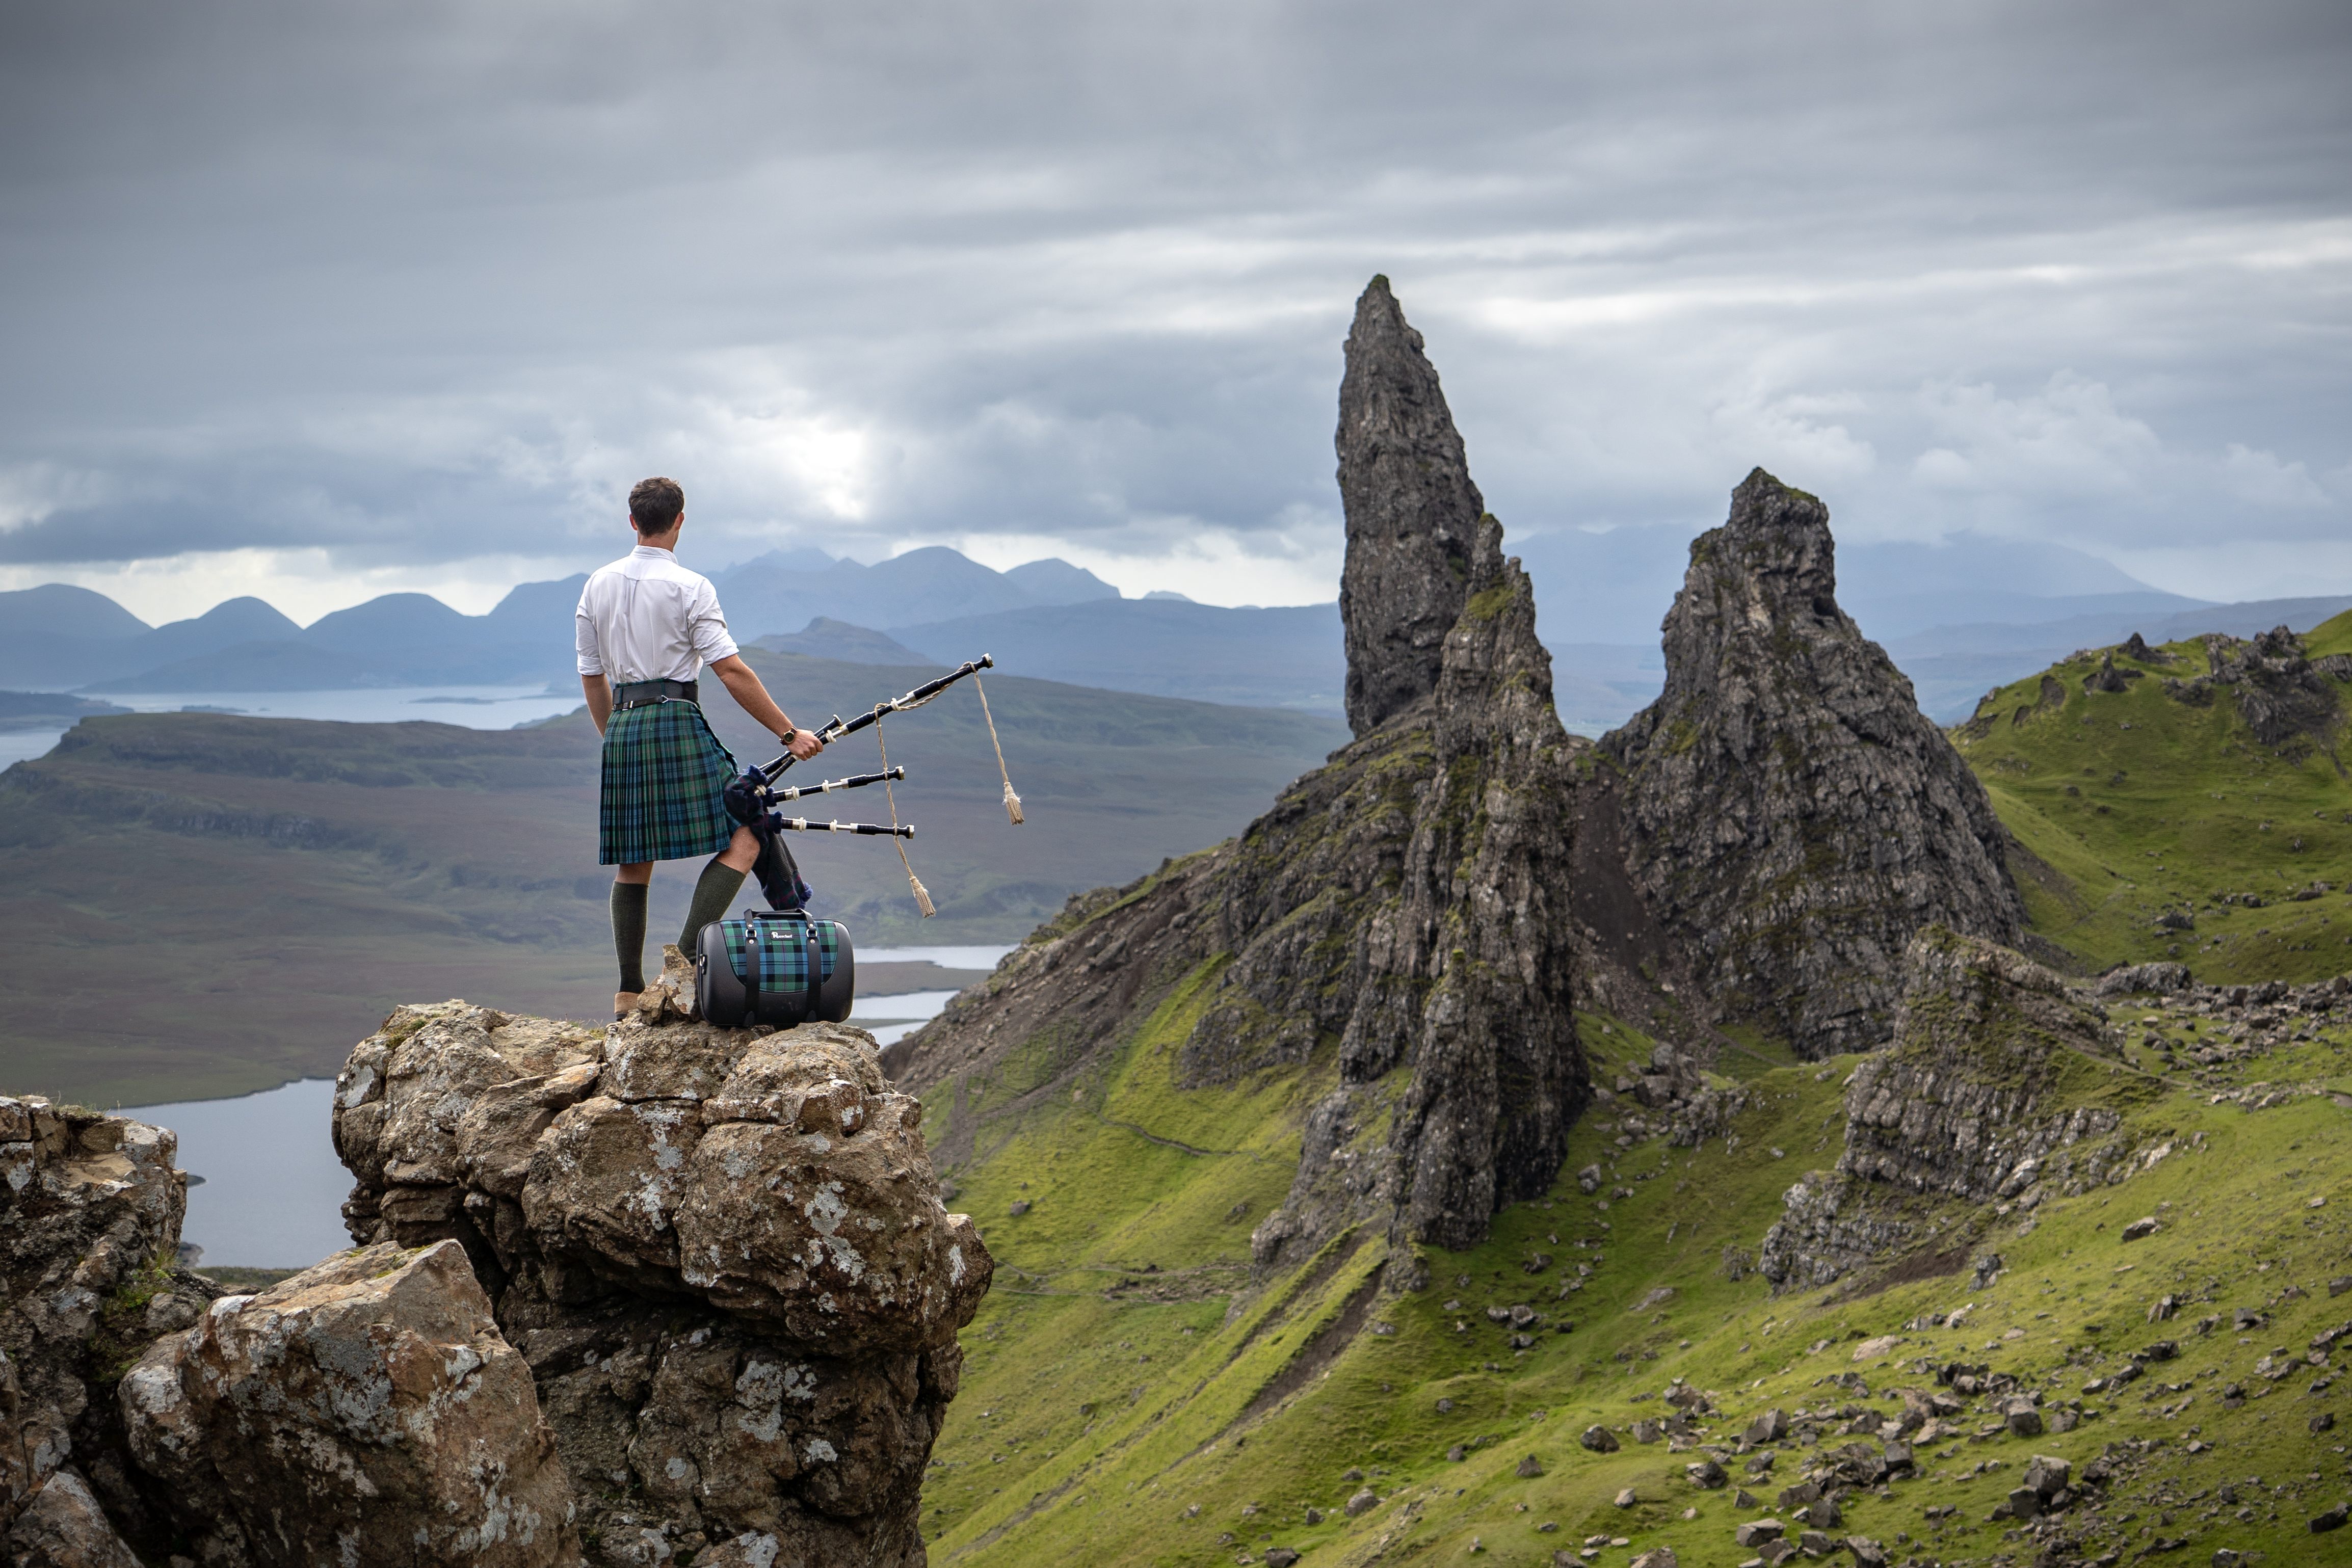 Scotland Trip - Group Travel | Atlas Obscura Adventures